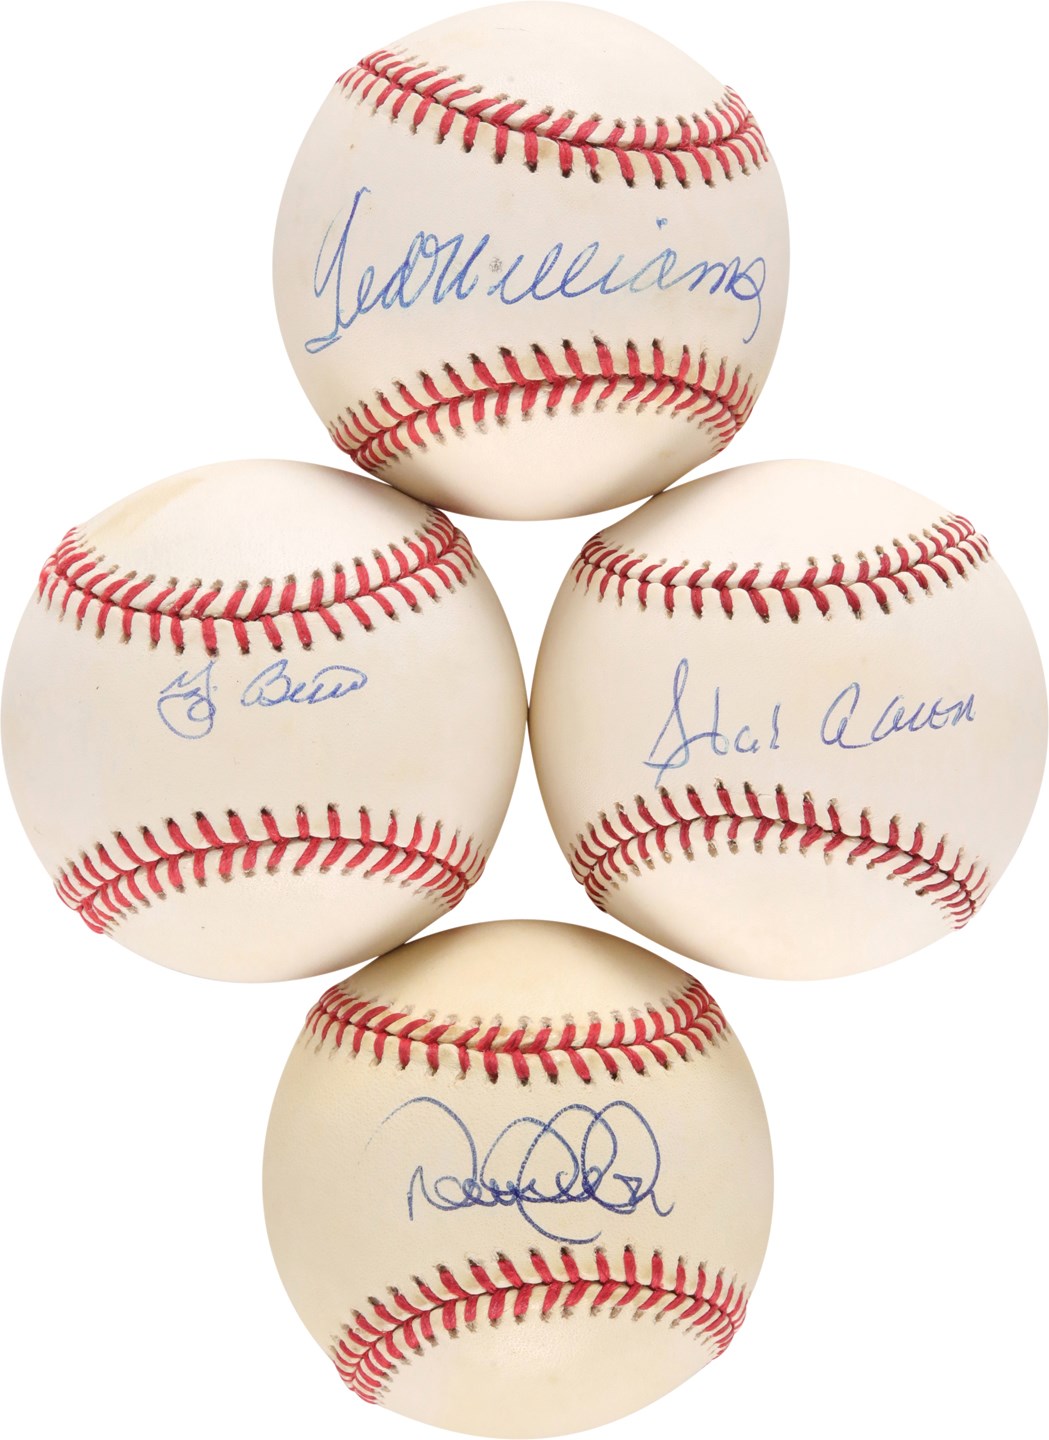 Baseball Autographs - Hall of Fame Single-Signed Baseball Collection (10) w/Williams & Jeter (PSA/JSA/MLB)